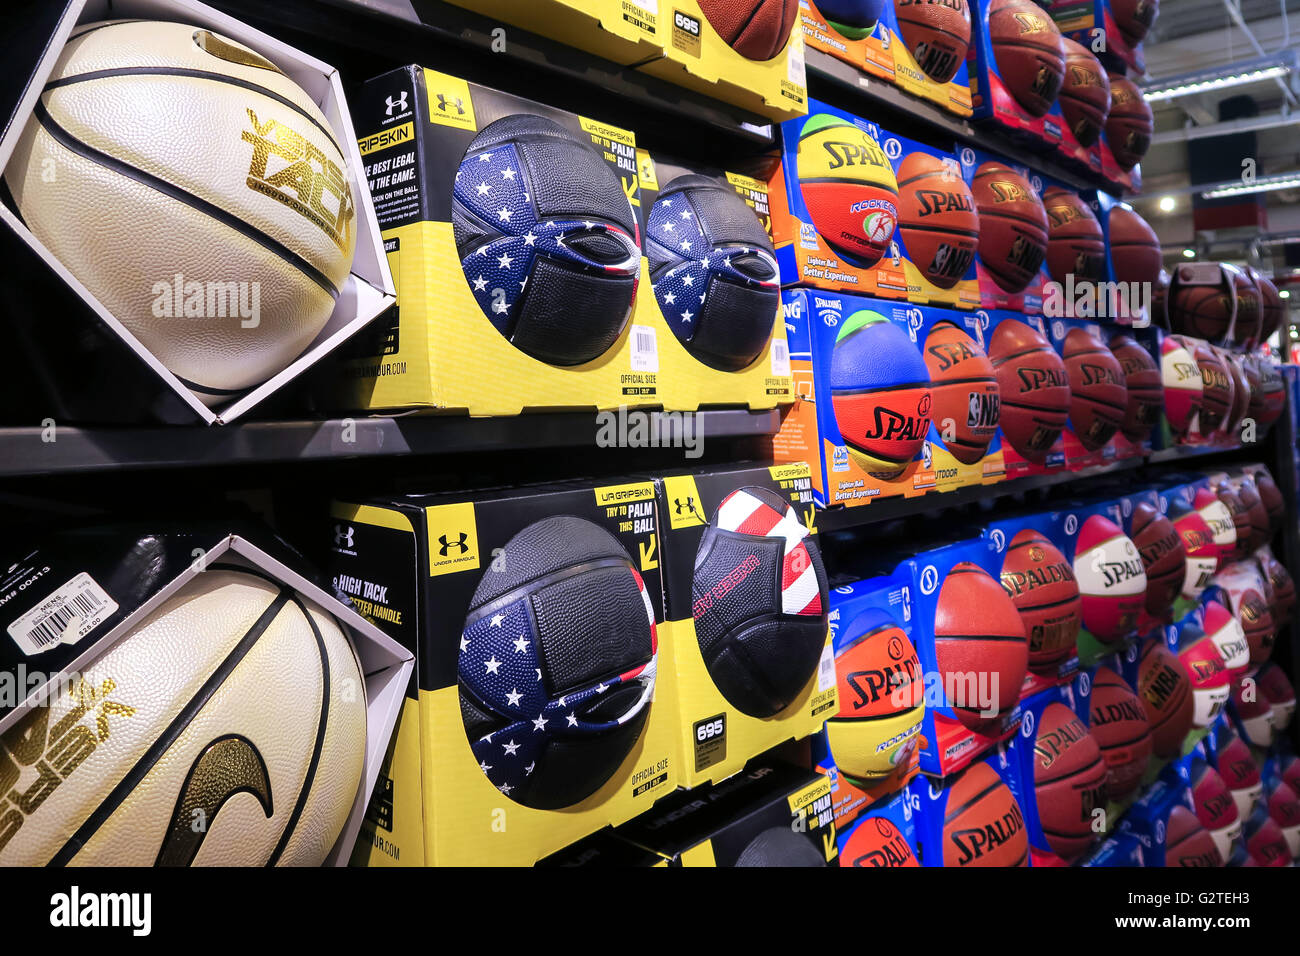 Modell's Sporting Goods Store Interieur, mit Nike Bällen mit Swoosh Logo, NYC Stockfoto